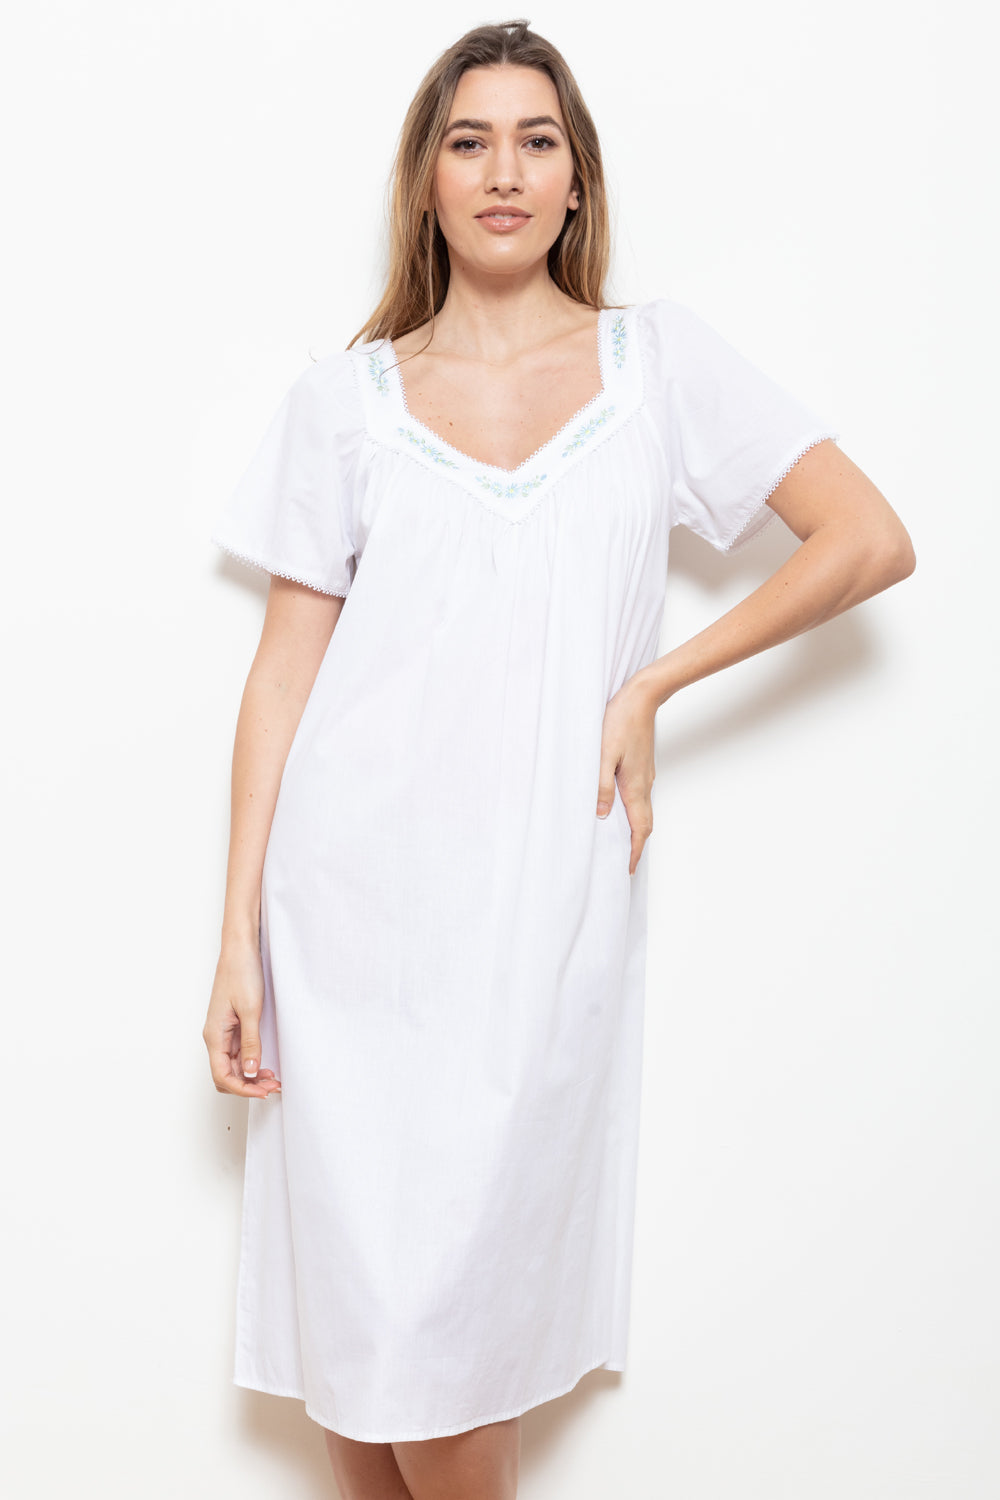 Cottonreal 'Gabby' Cotton Short Sleeve Nightdress